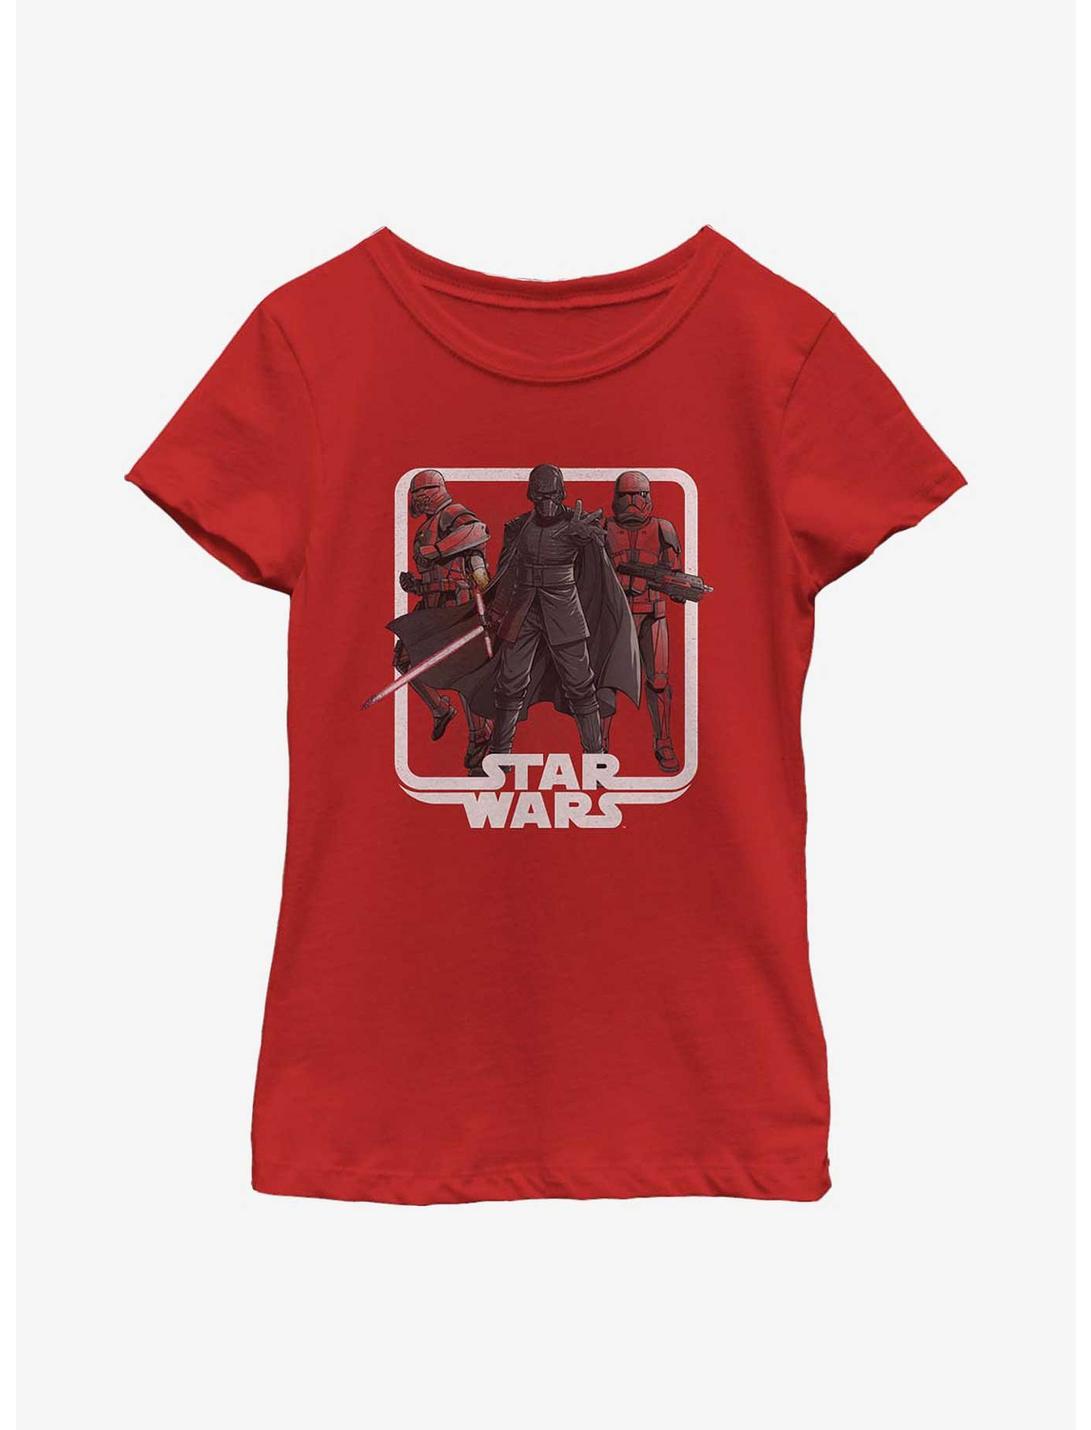 Star Wars Episode IX: The Rise Of Skywalker Vindication Youth Girls T-Shirt, RED, hi-res